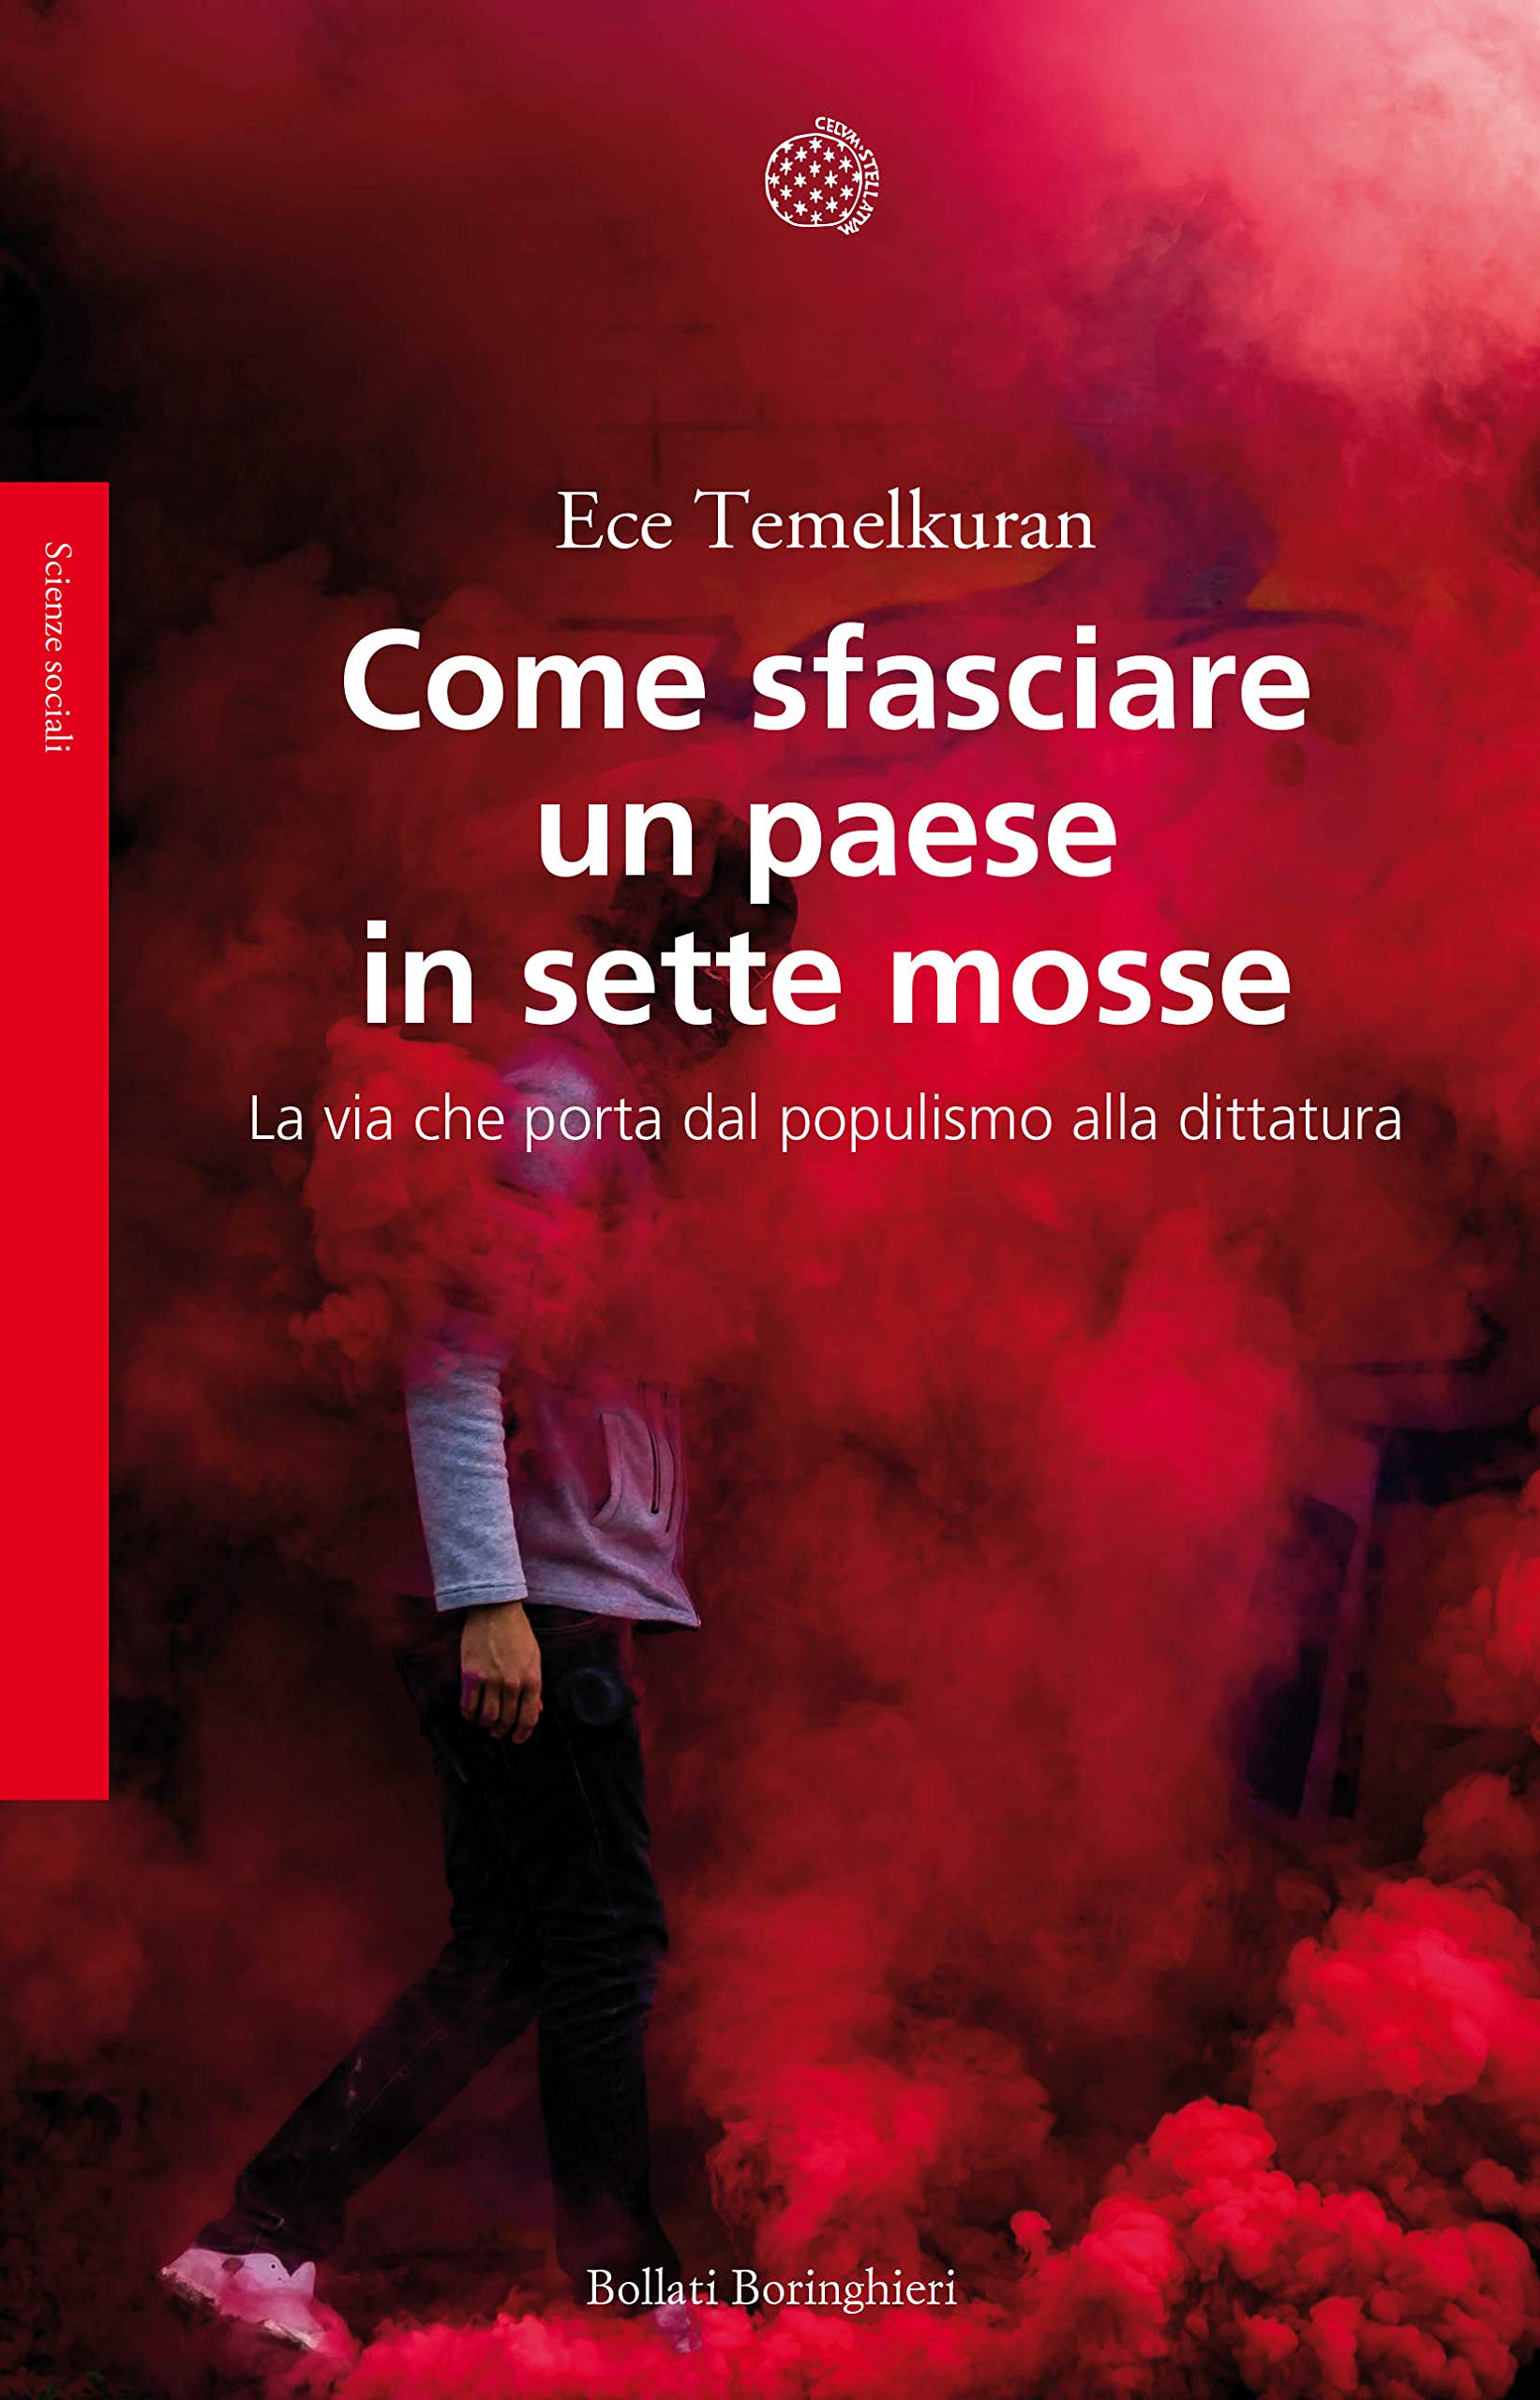 Ece Temelkuran selected for Terzani Prize 2020